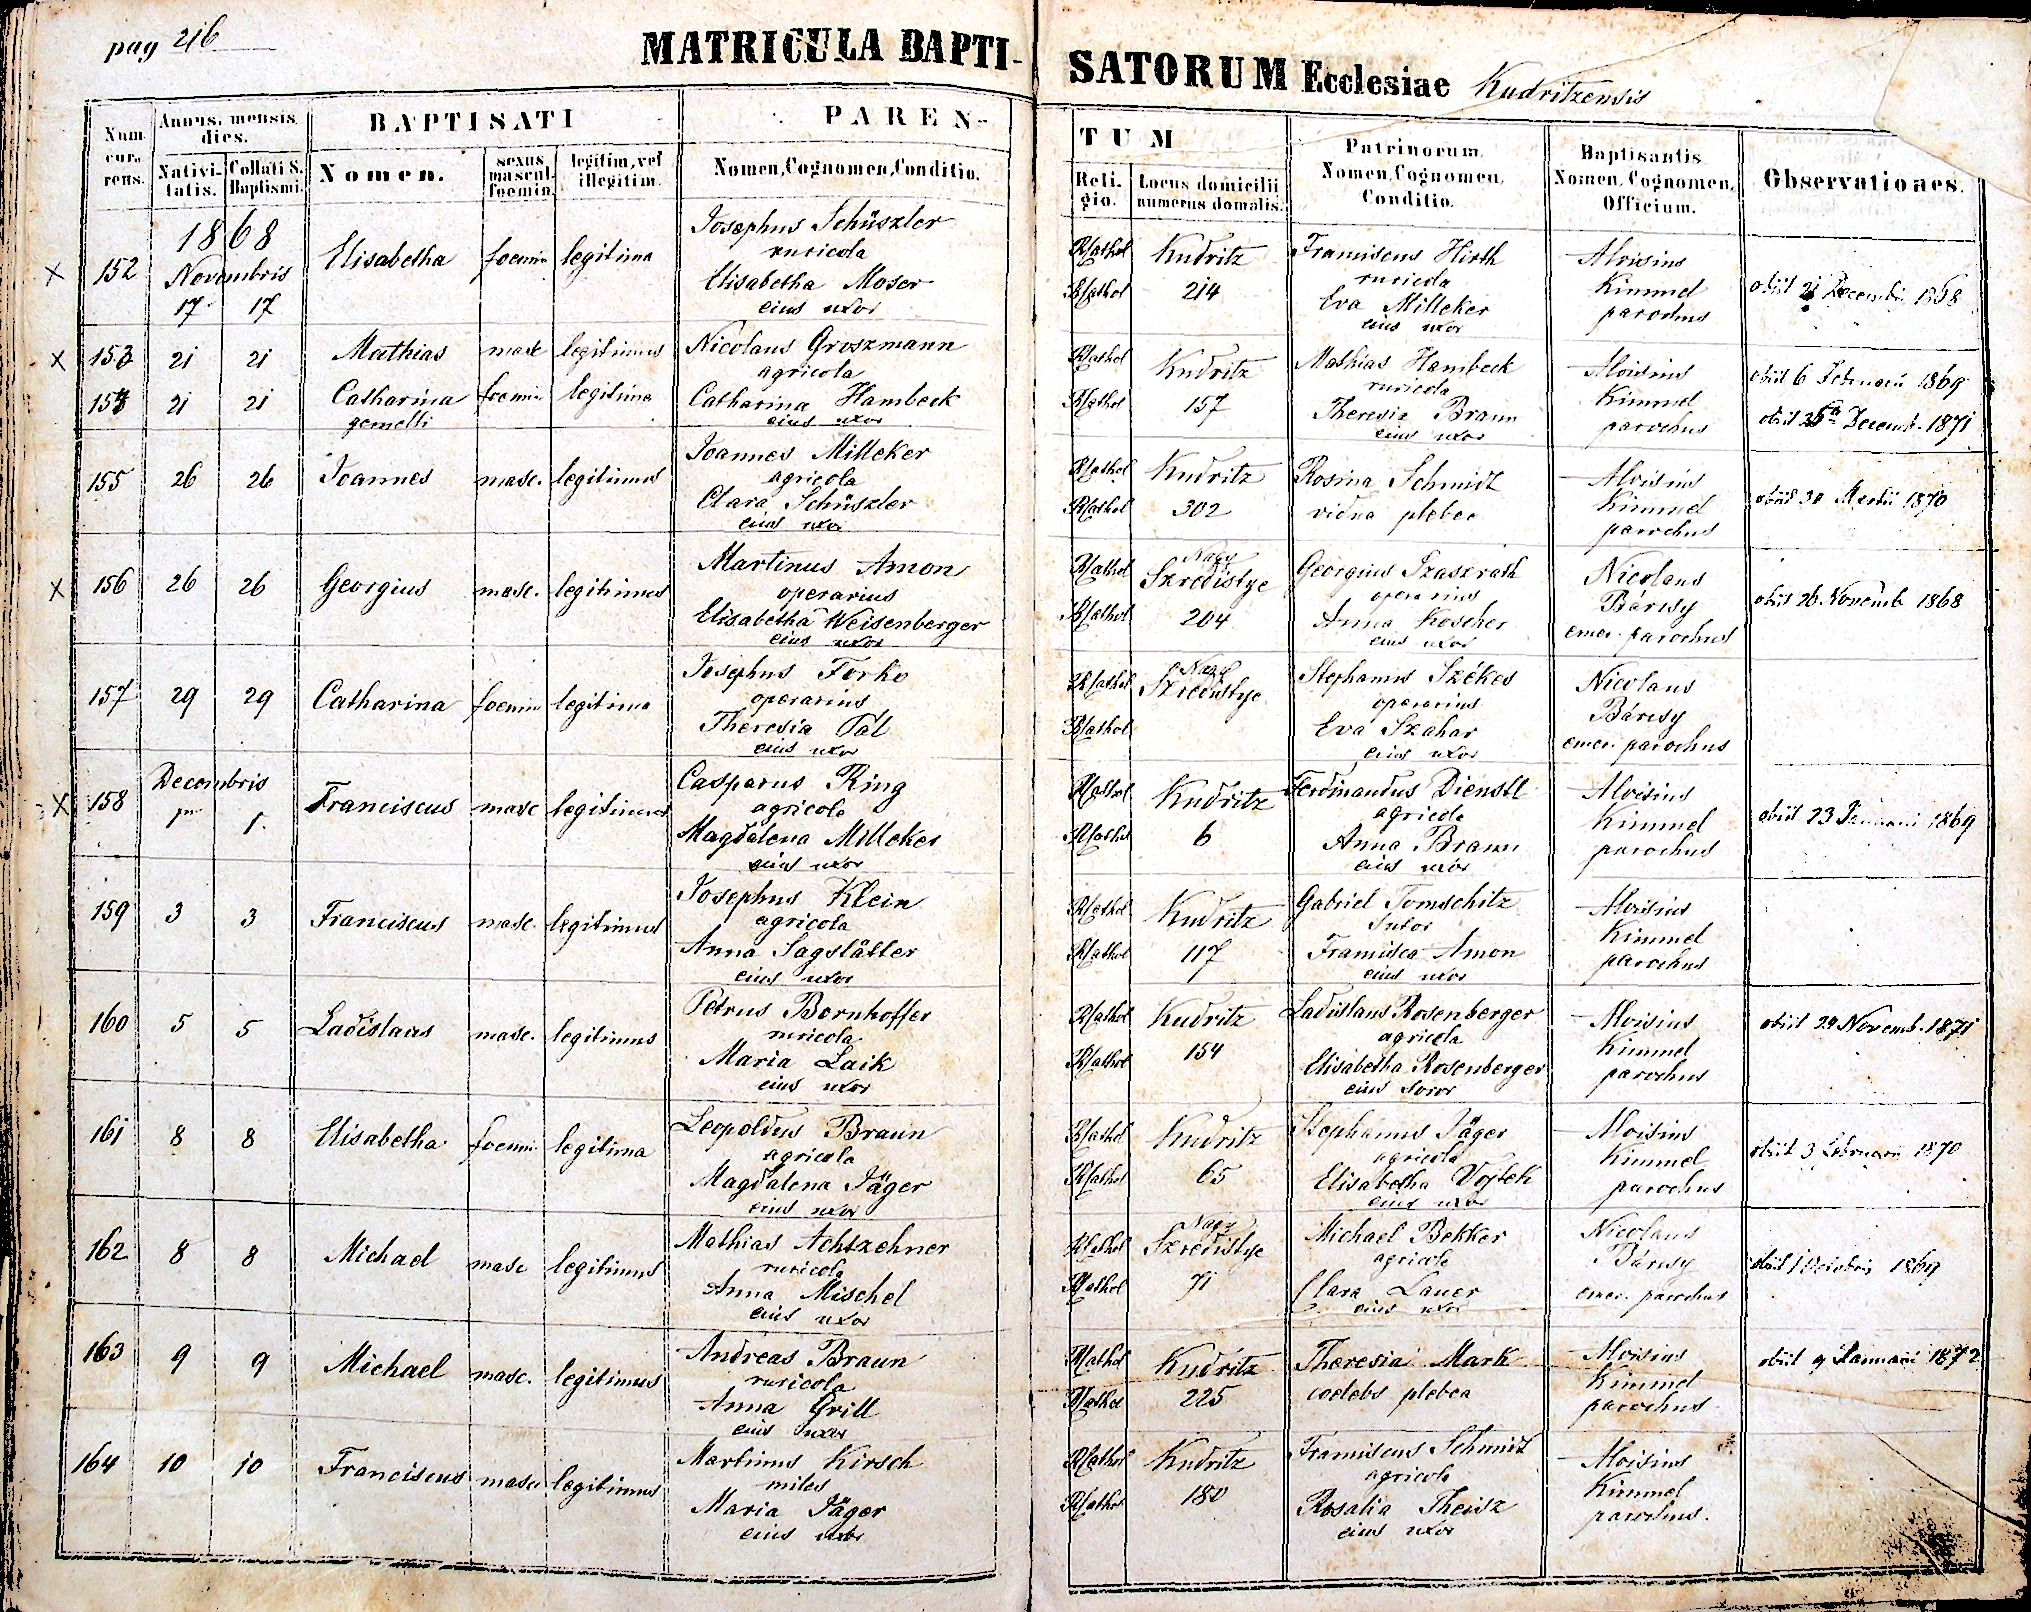 images/church_records/BIRTHS/1852-1870B/216